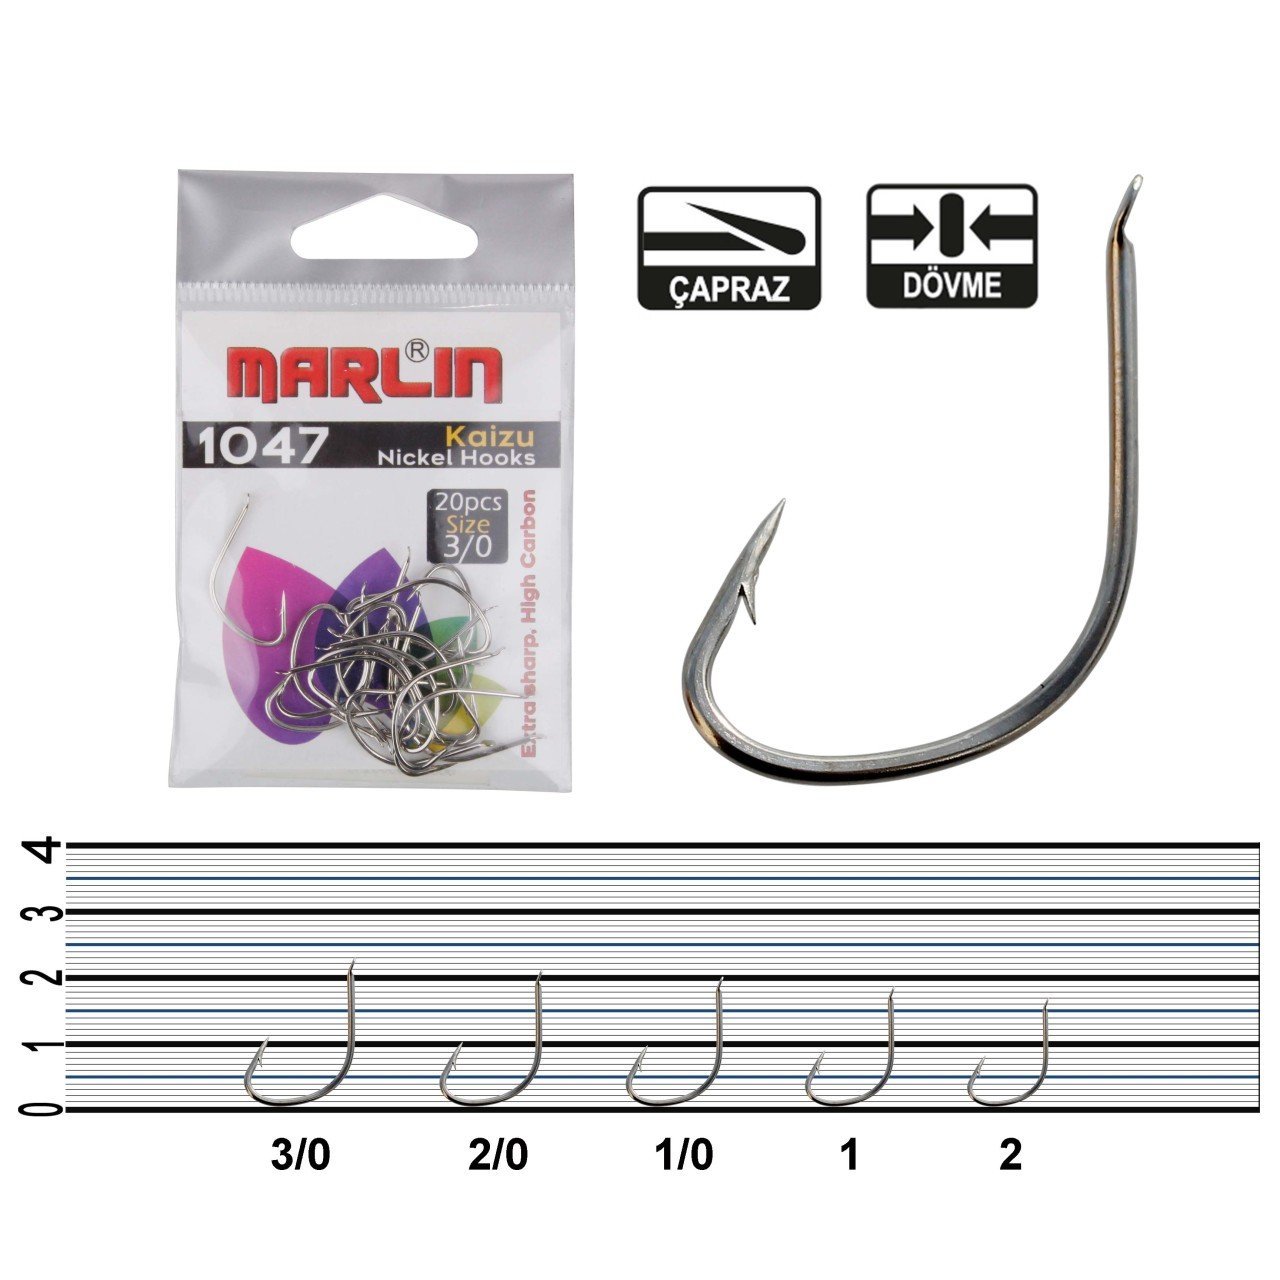 Marlin 1047 Kaizu-T HC Nickel İğne No:2 (20Pcs)